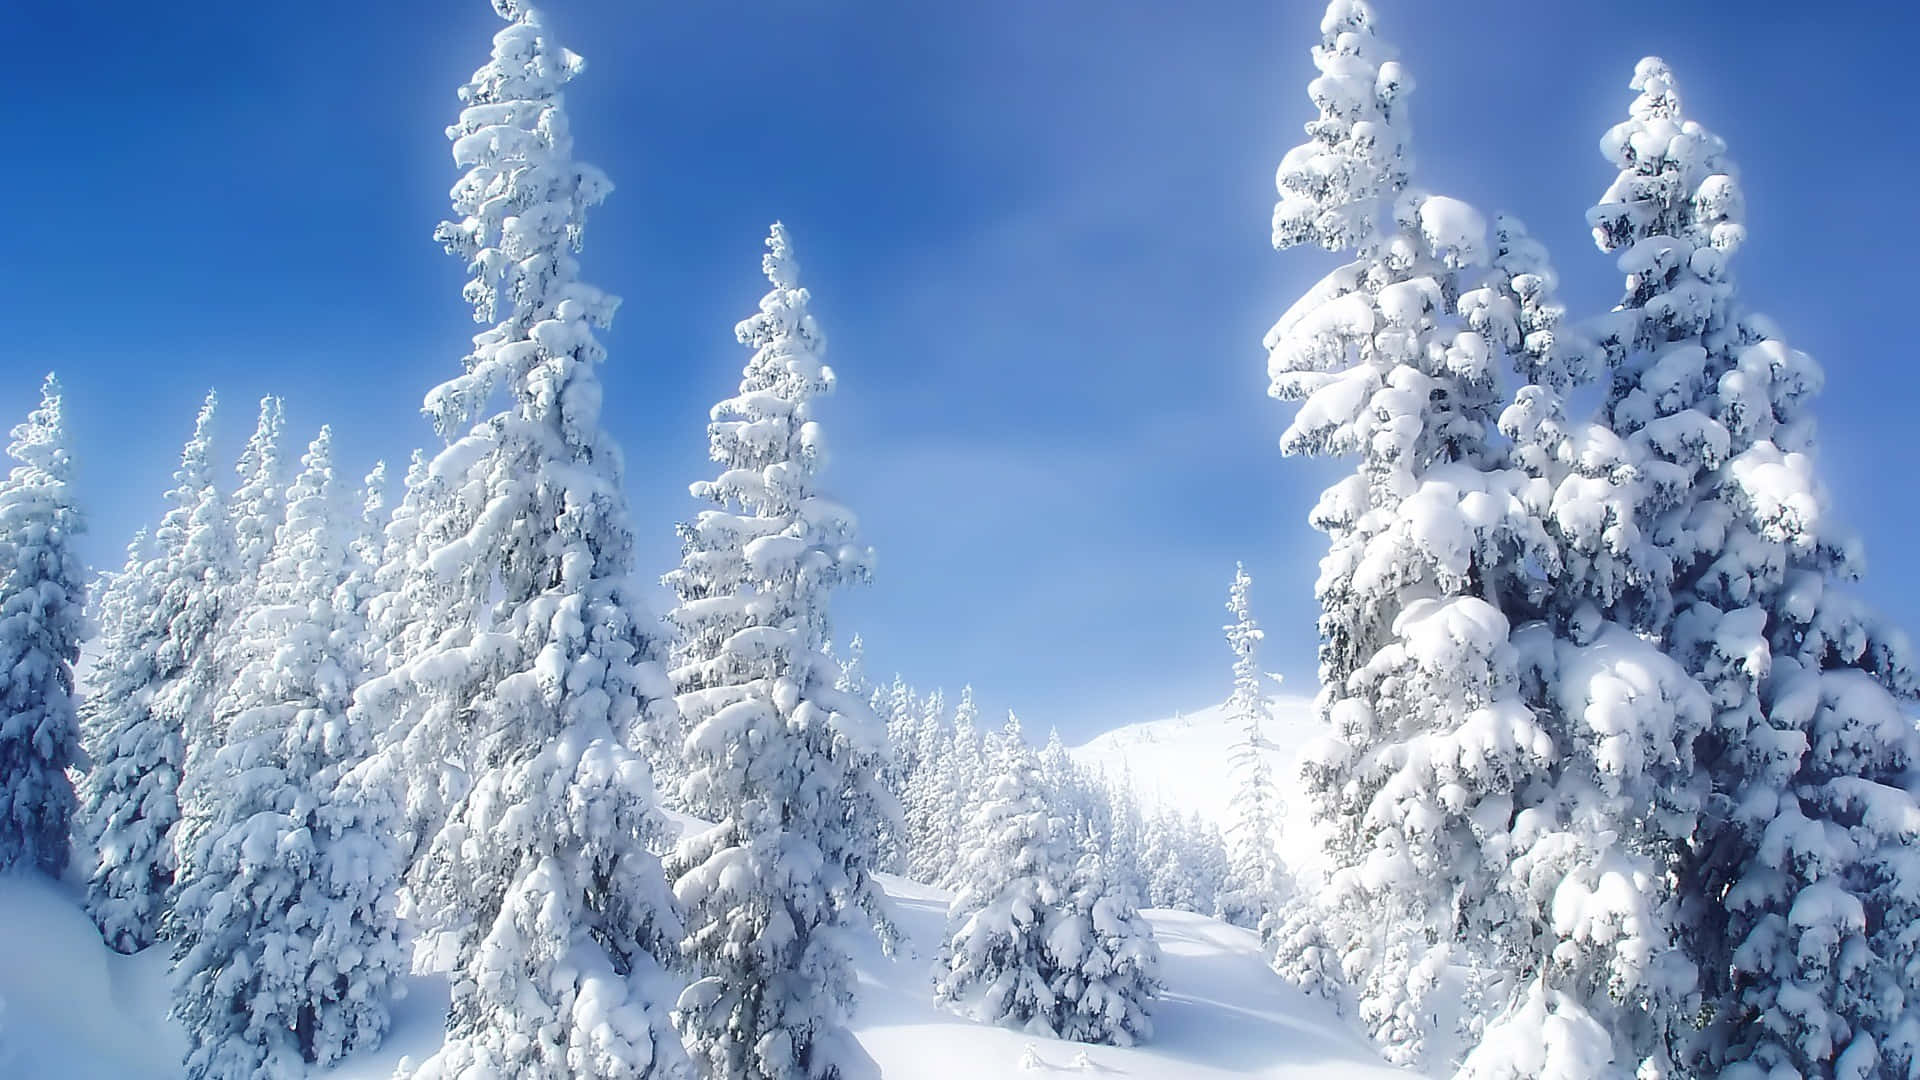 Towering Snowcapped Trees In Winter Wonderland Background